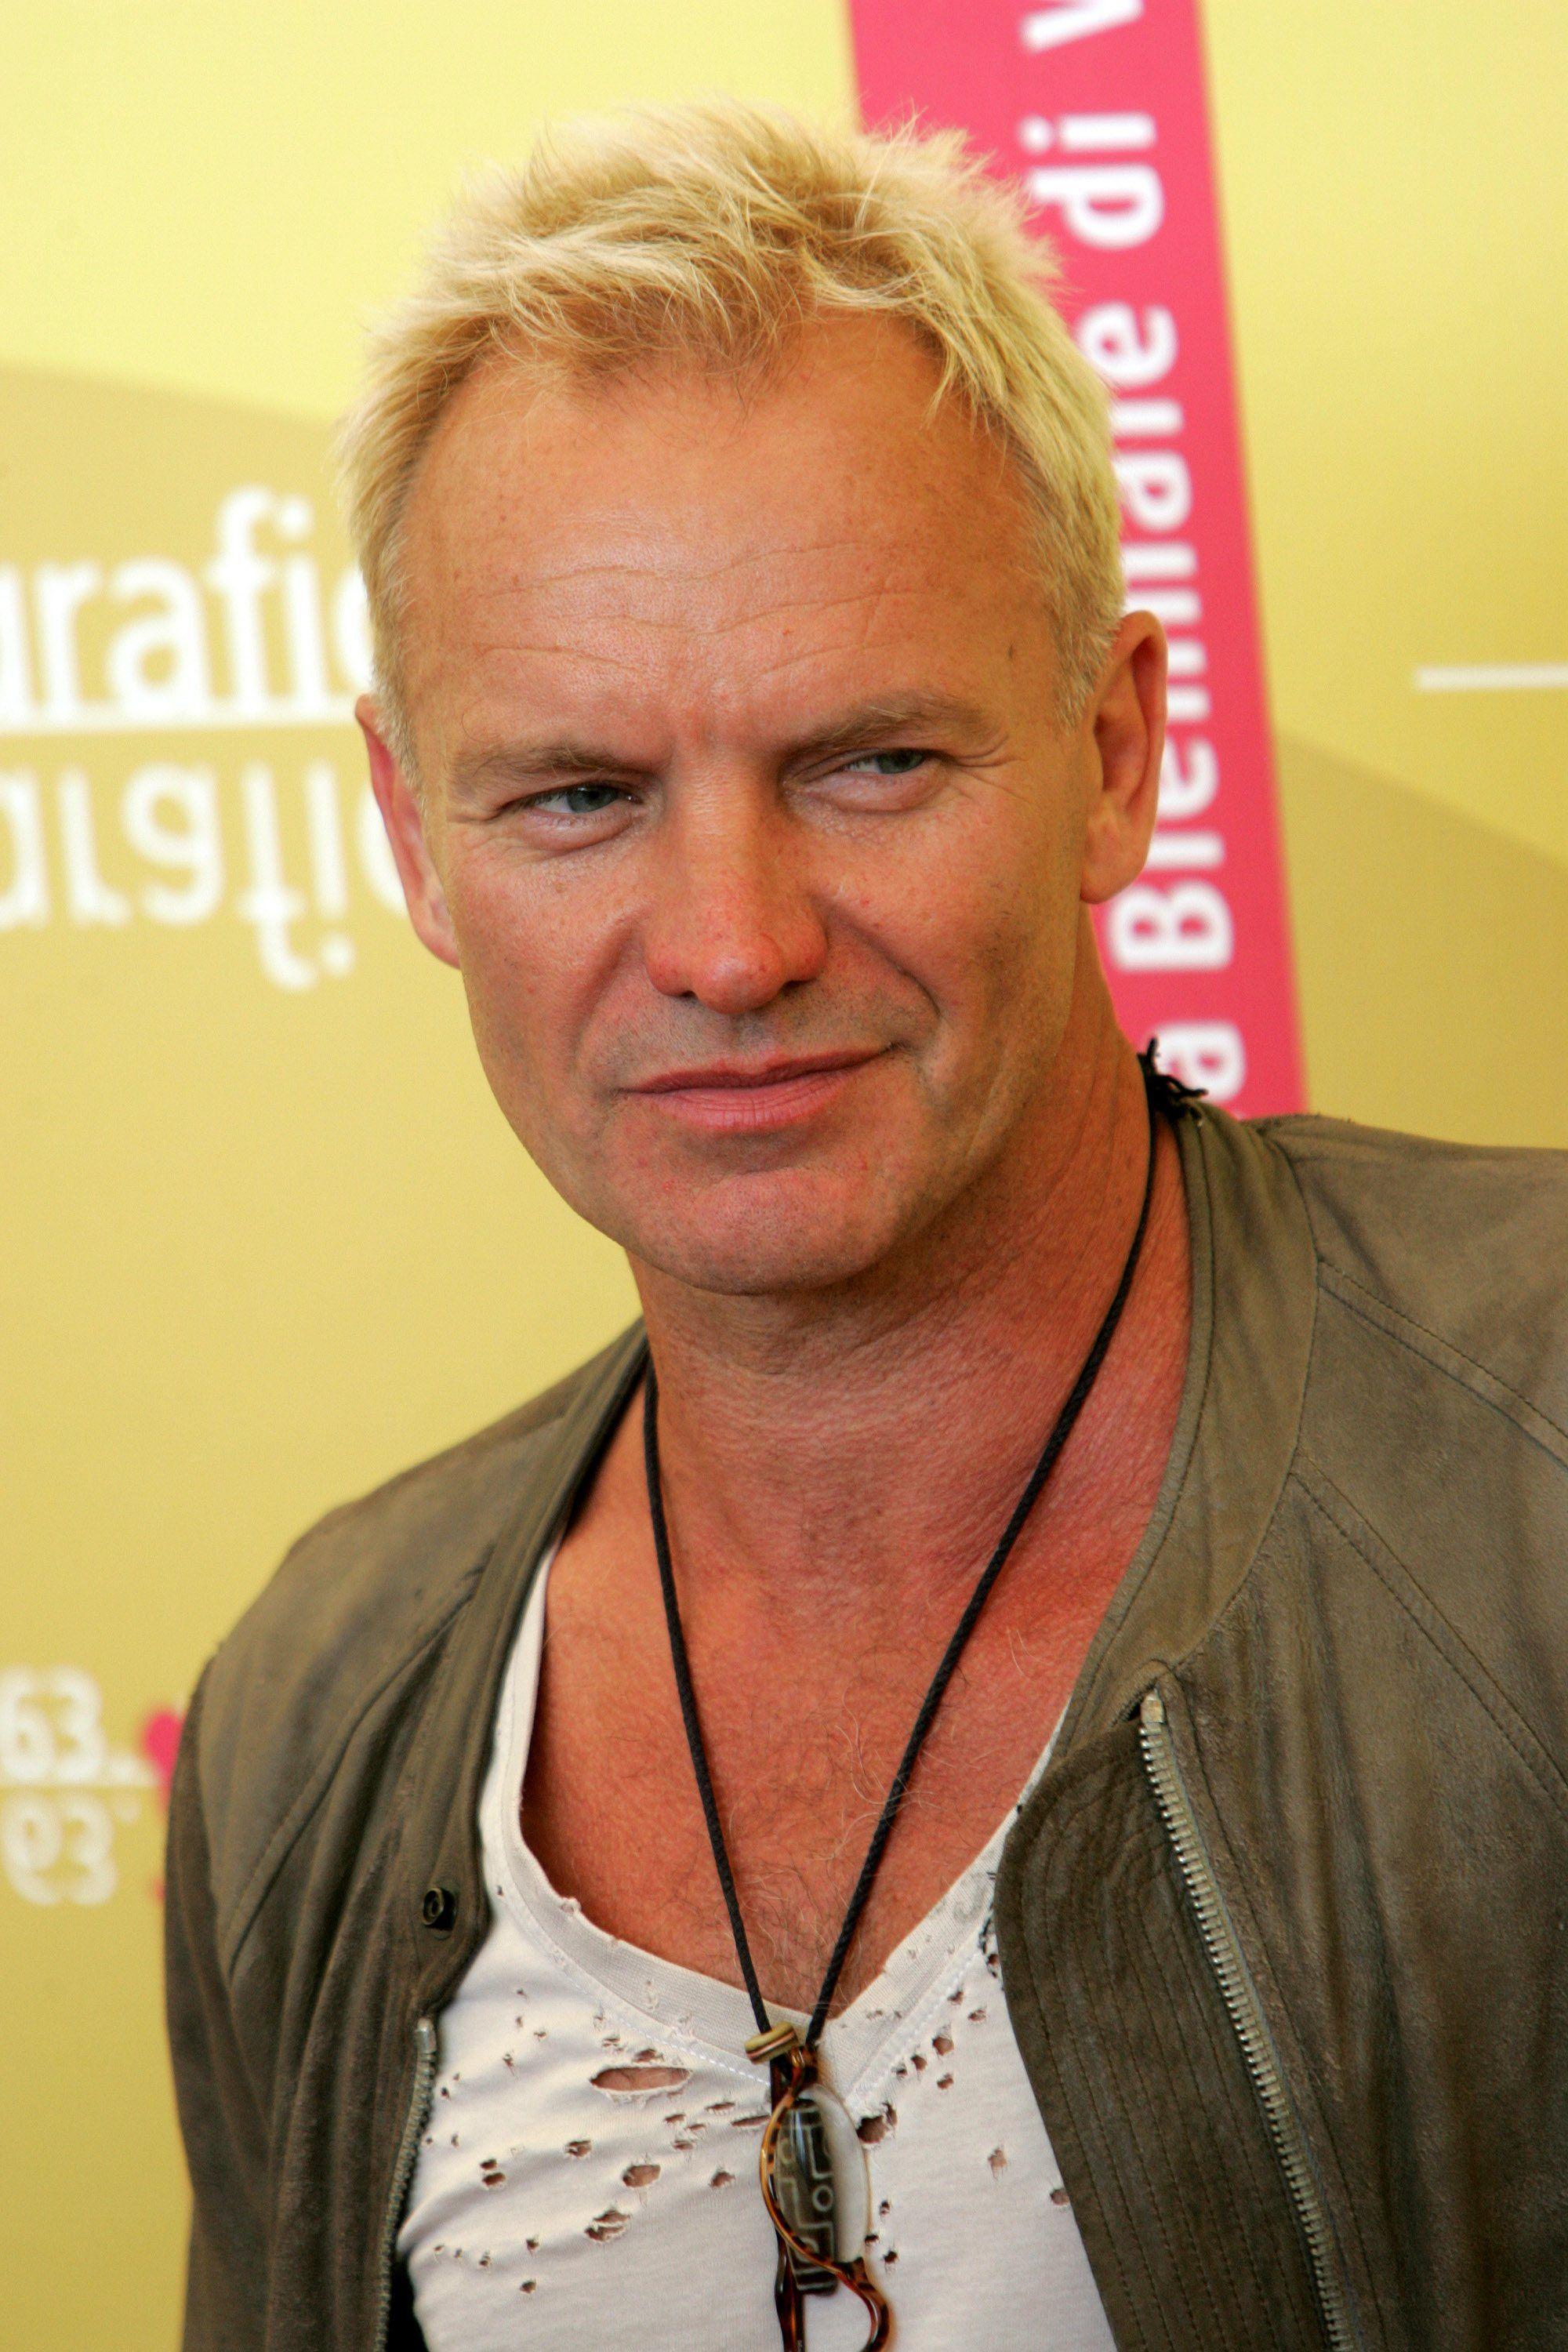 Sting Photo fanclubs. Sting